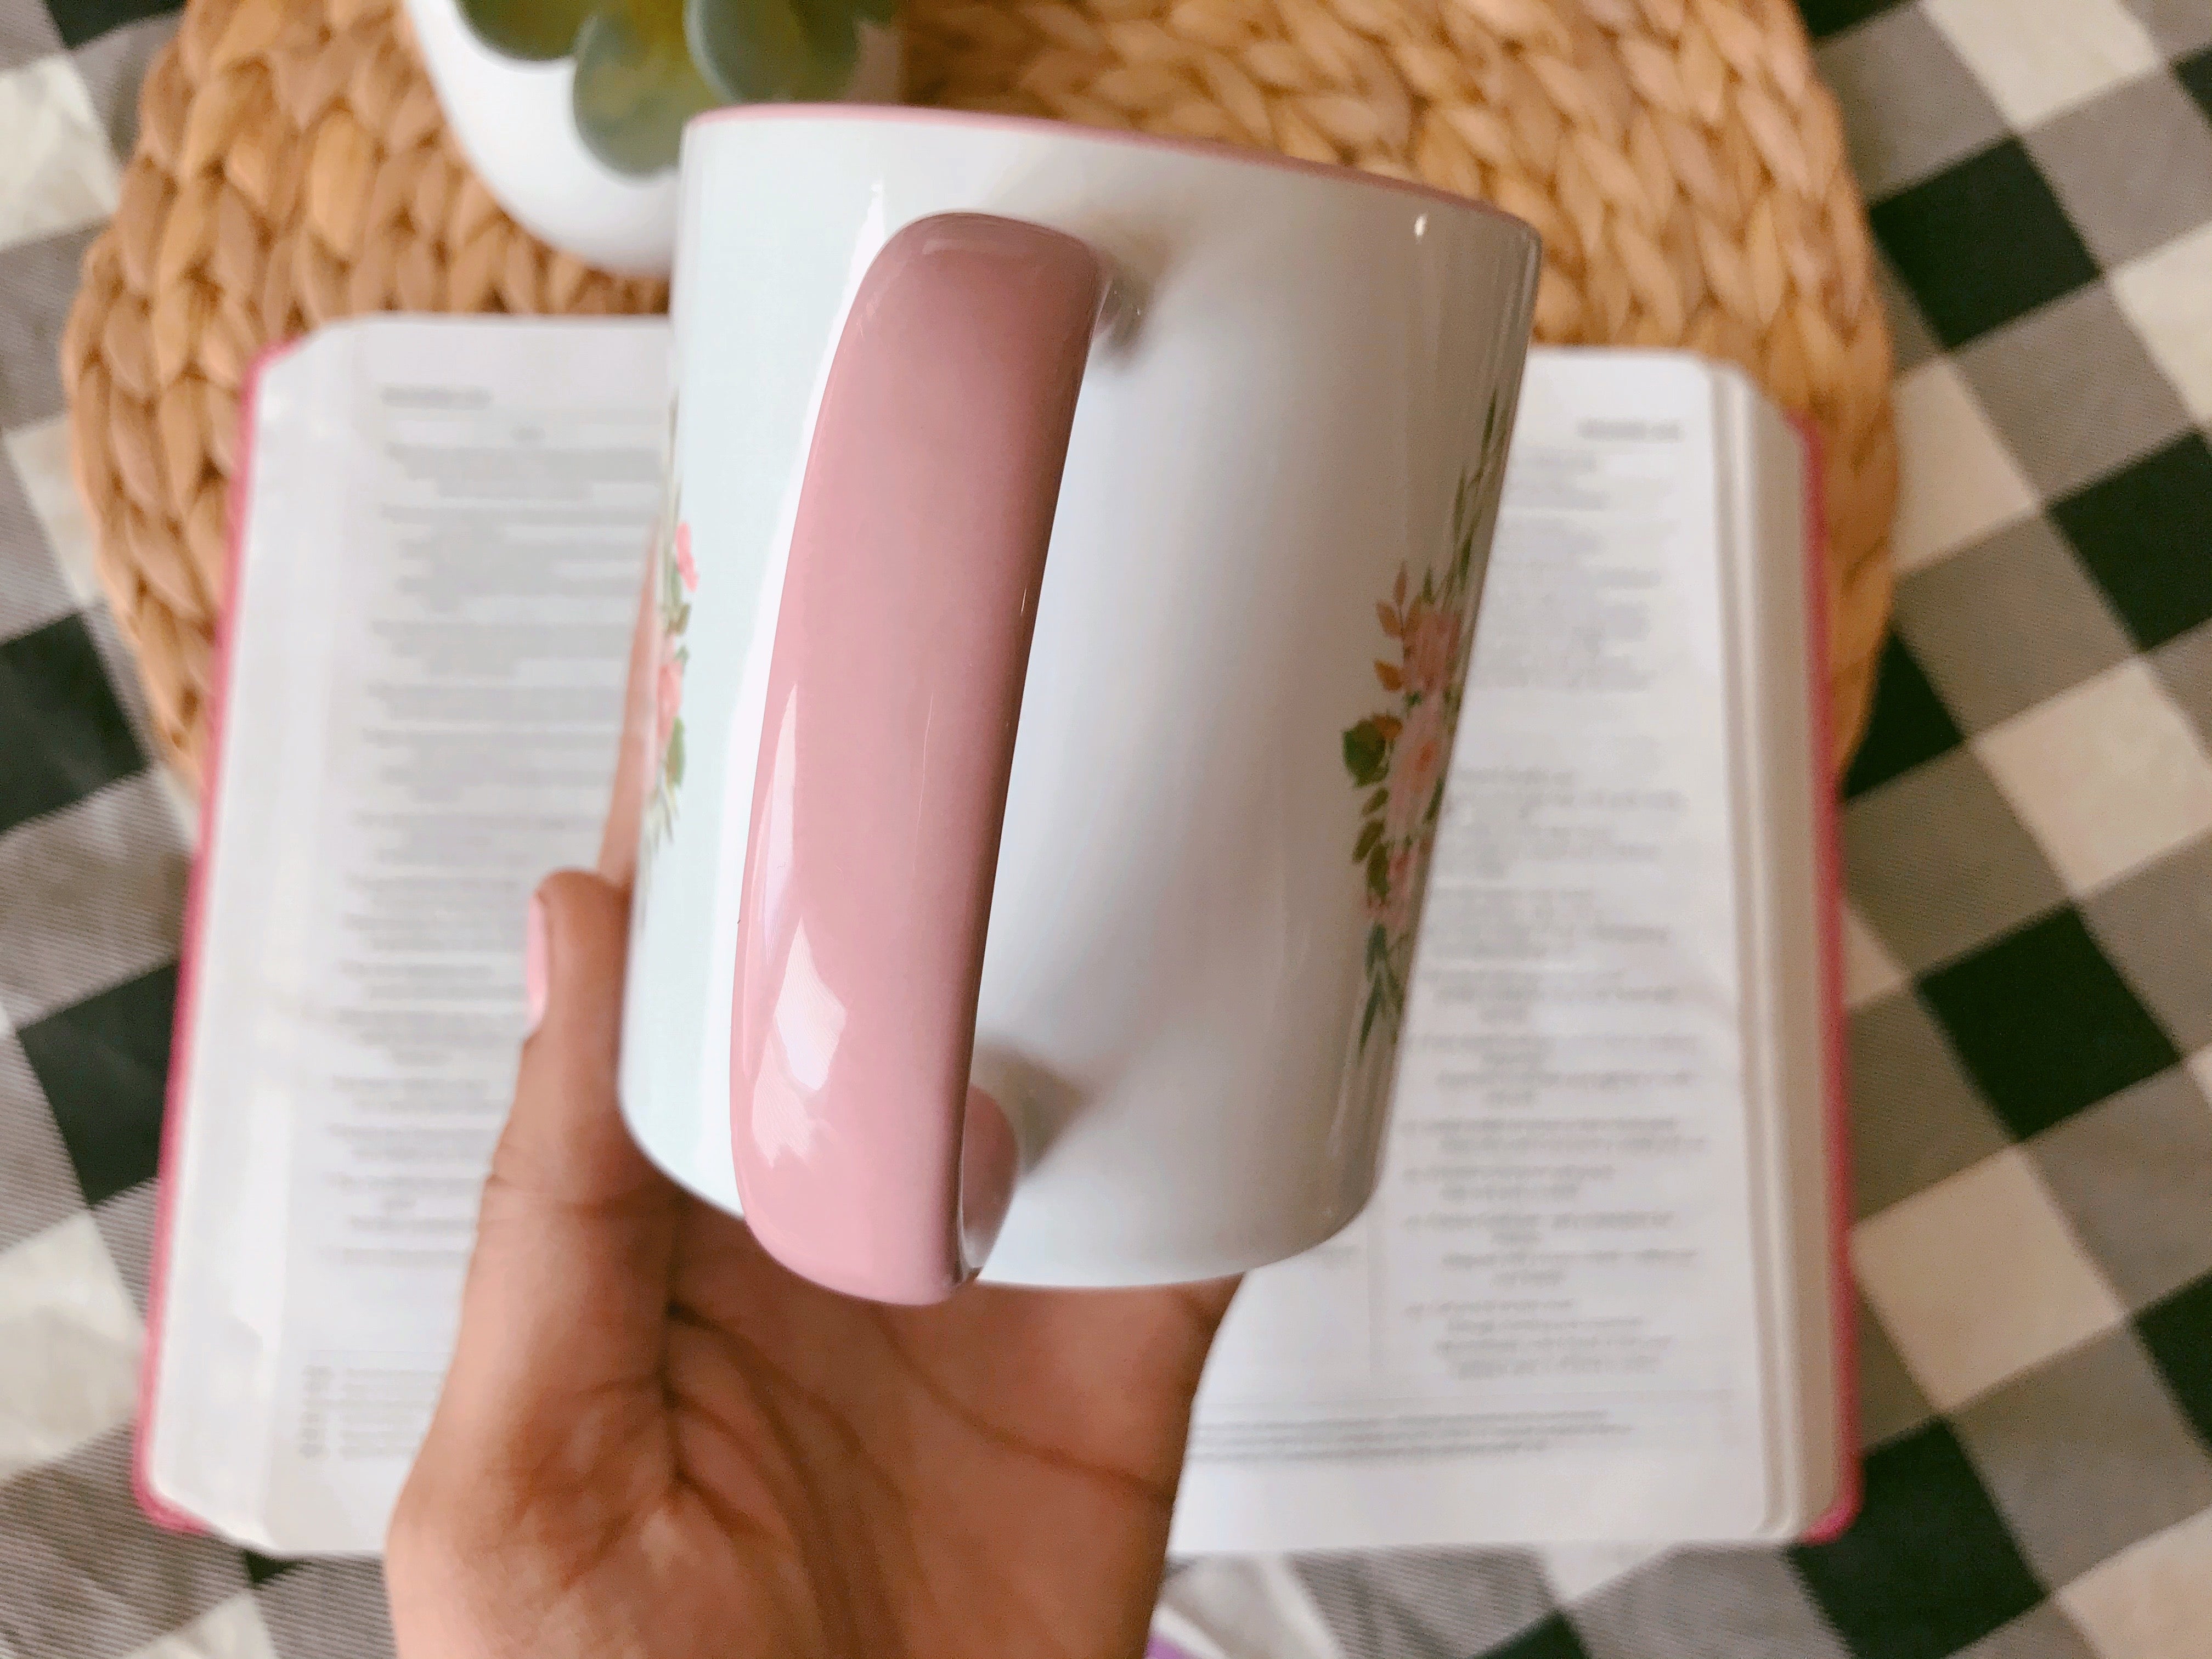 inspirational mug, Floral It is well with my soul coffee cup, cute cof –  Joyful Moose